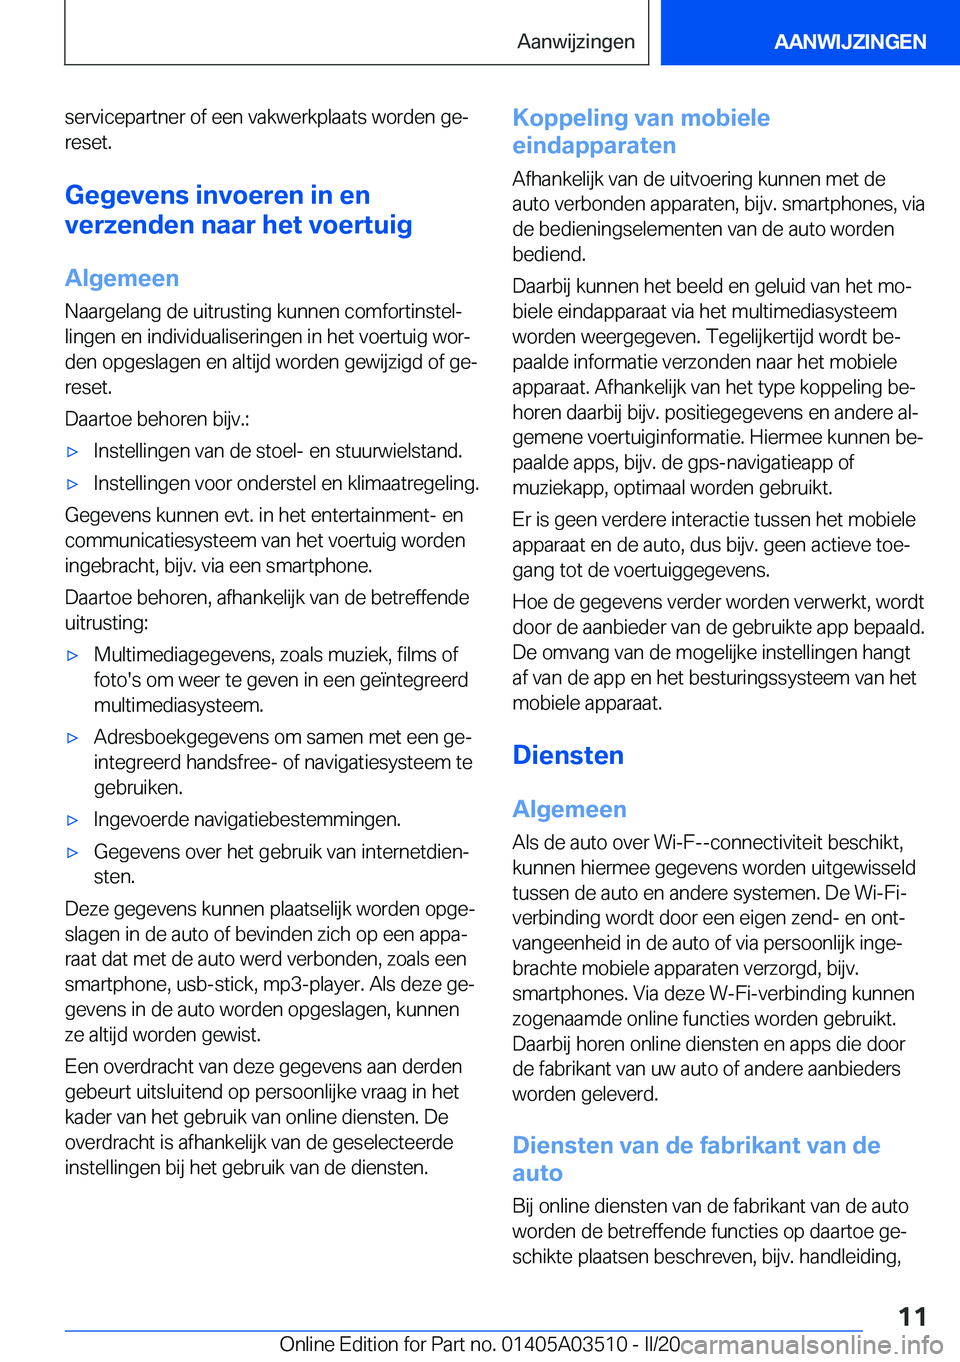 BMW X3 2020  Instructieboekjes (in Dutch) �s�e�r�v�i�c�e�p�a�r�t�n�e�r��o�f��e�e�n��v�a�k�w�e�r�k�p�l�a�a�t�s��w�o�r�d�e�n��g�ej
�r�e�s�e�t�.
�G�e�g�e�v�e�n�s��i�n�v�o�e�r�e�n��i�n��e�n
�v�e�r�z�e�n�d�e�n��n�a�a�r��h�e�t��v�o�e�r�